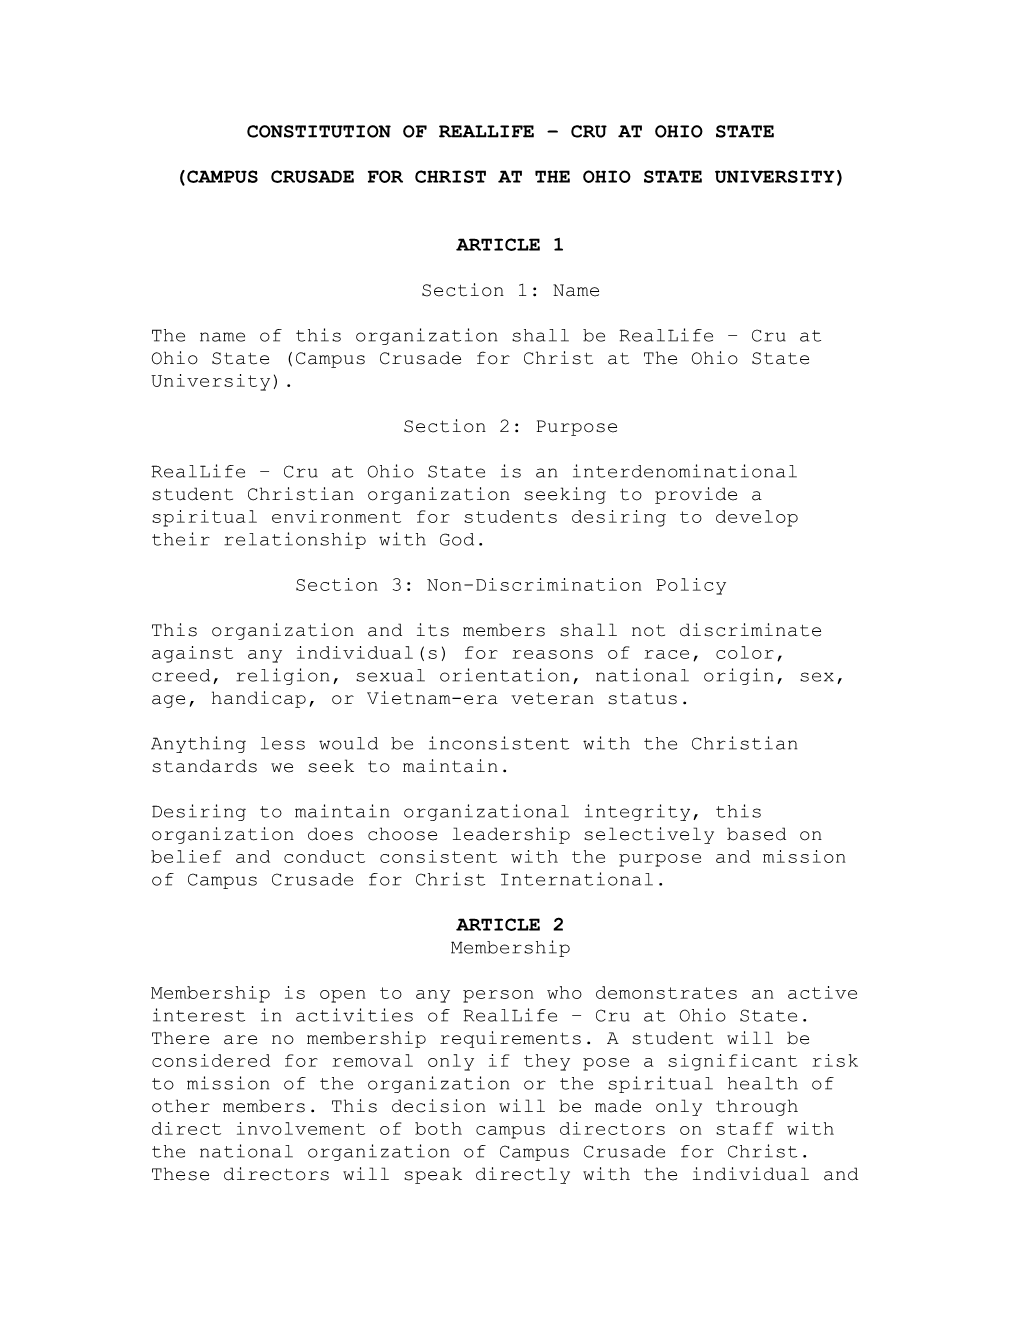 Constitution of Reallife Cru at Ohio State